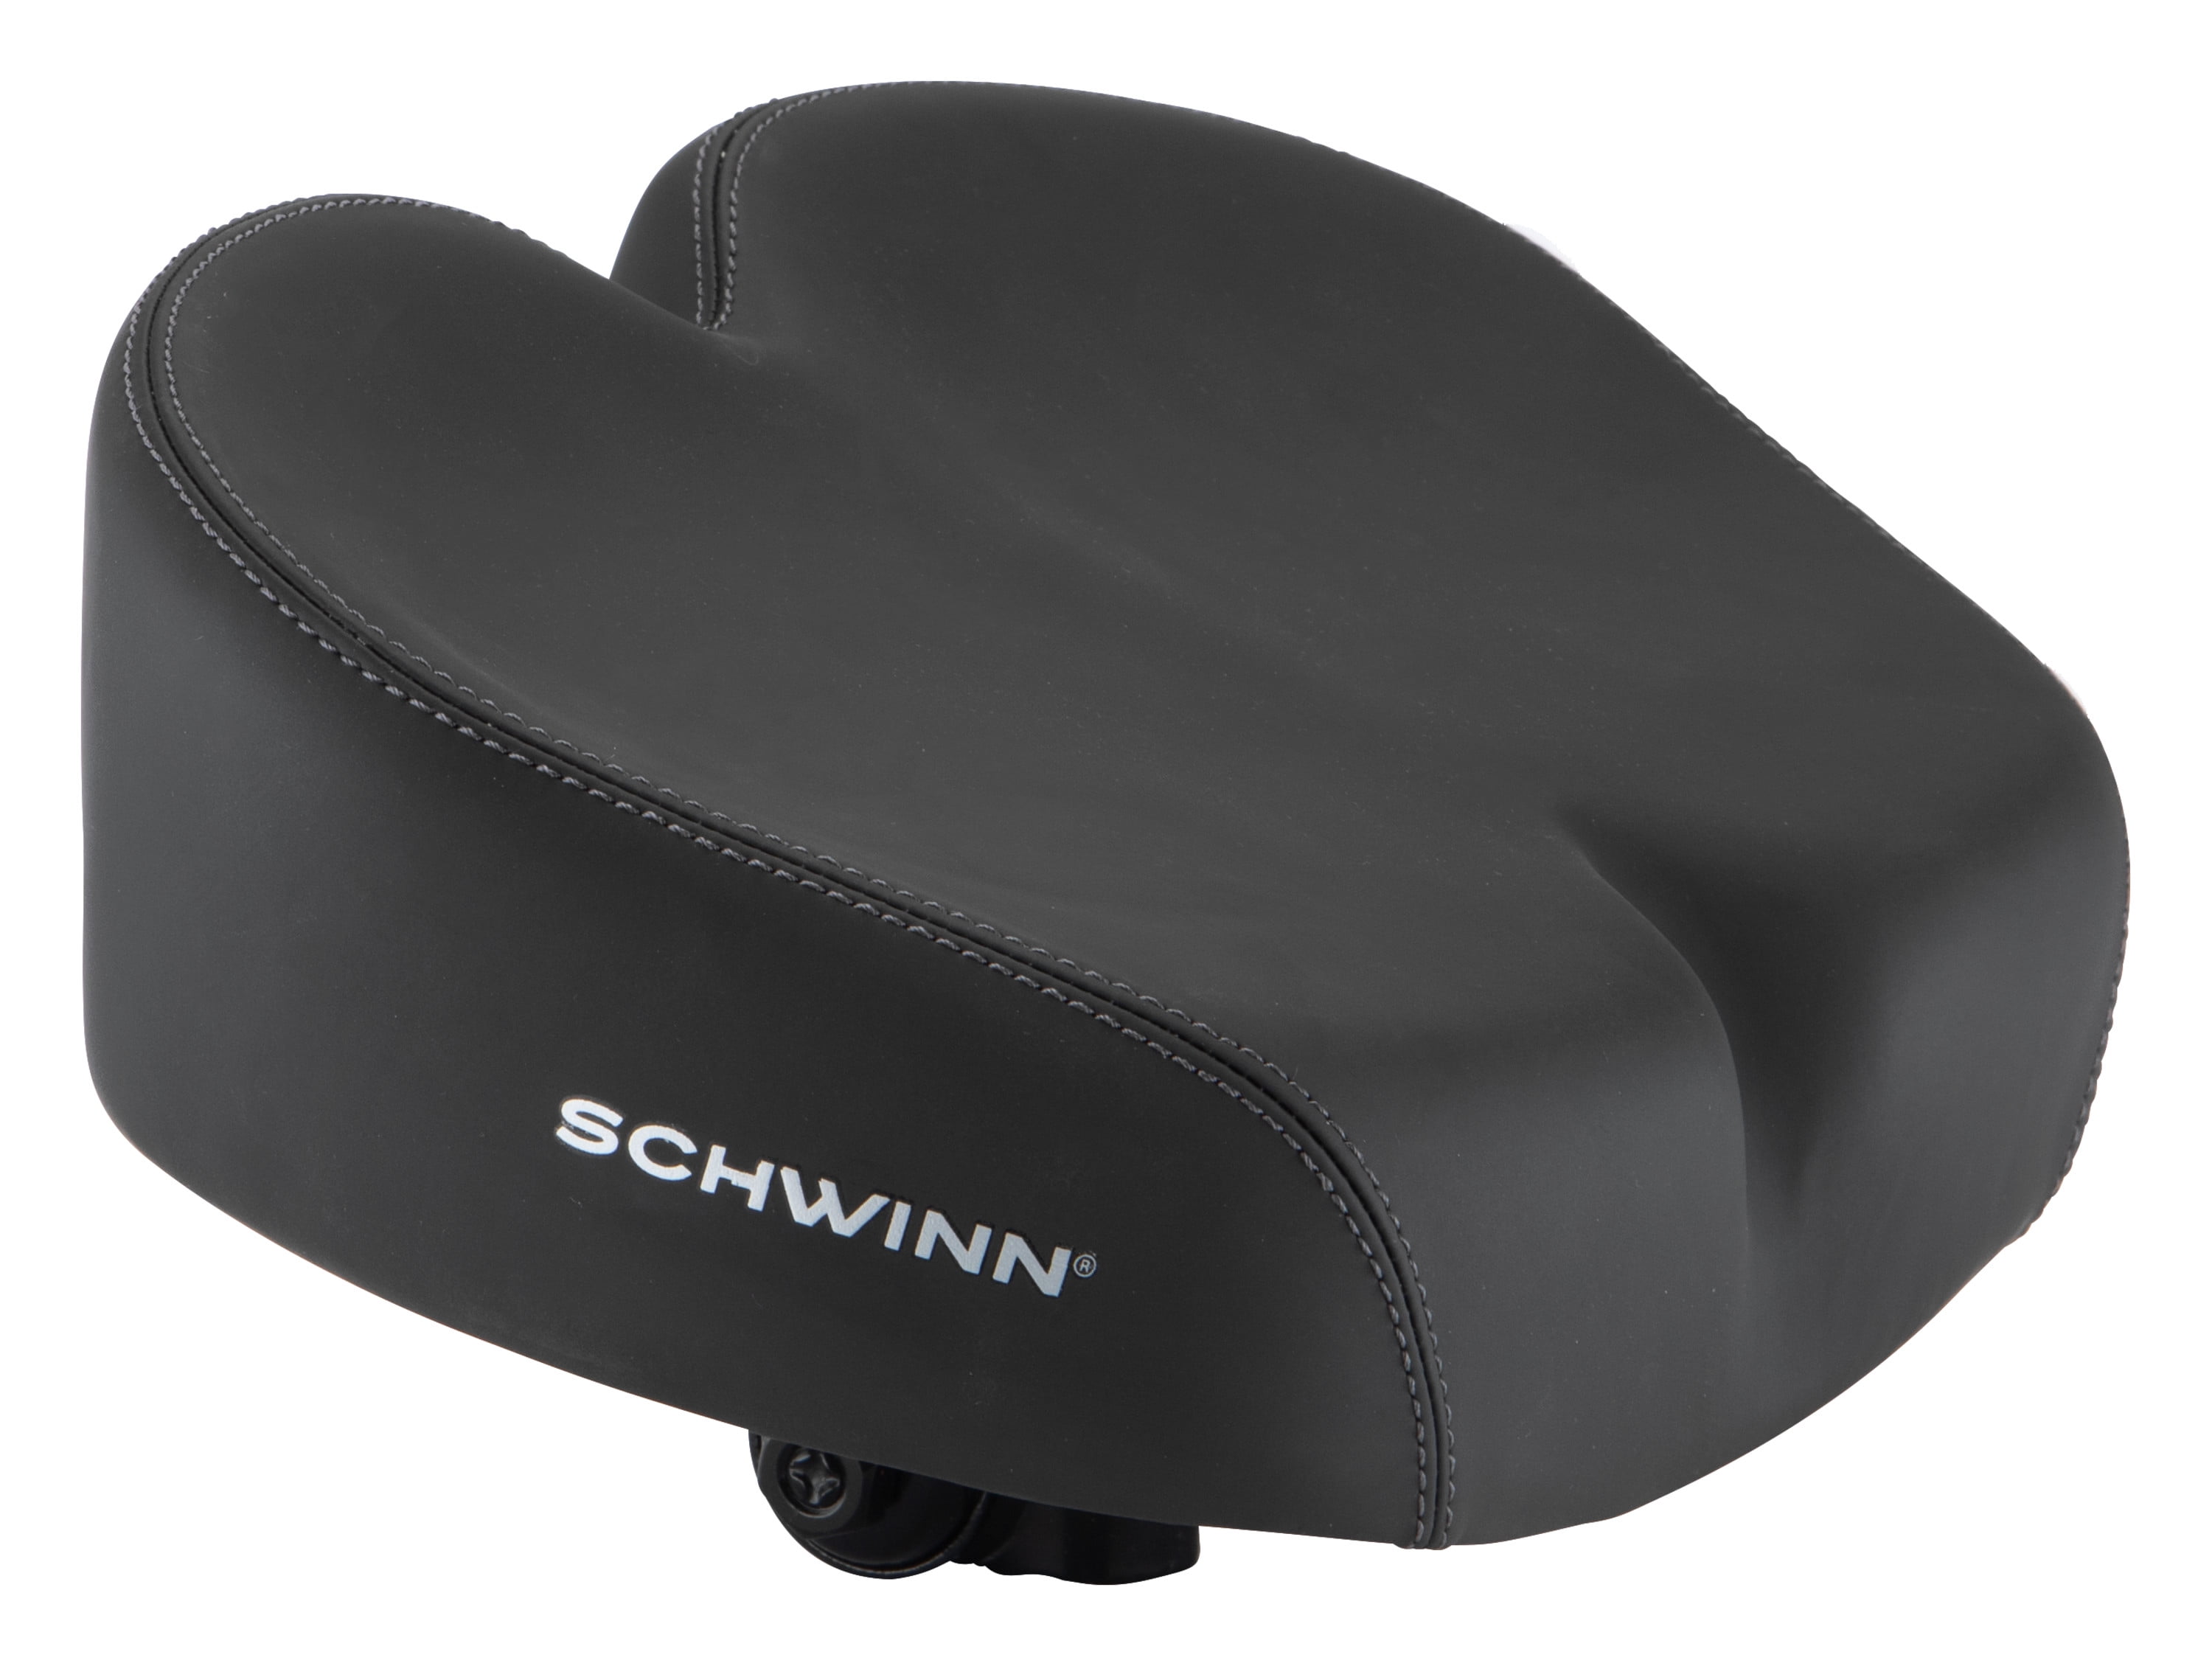 Schwinn High Density Soft Foam Comfort Noseless Bike Seat Black Ready 2 Use for sale online 